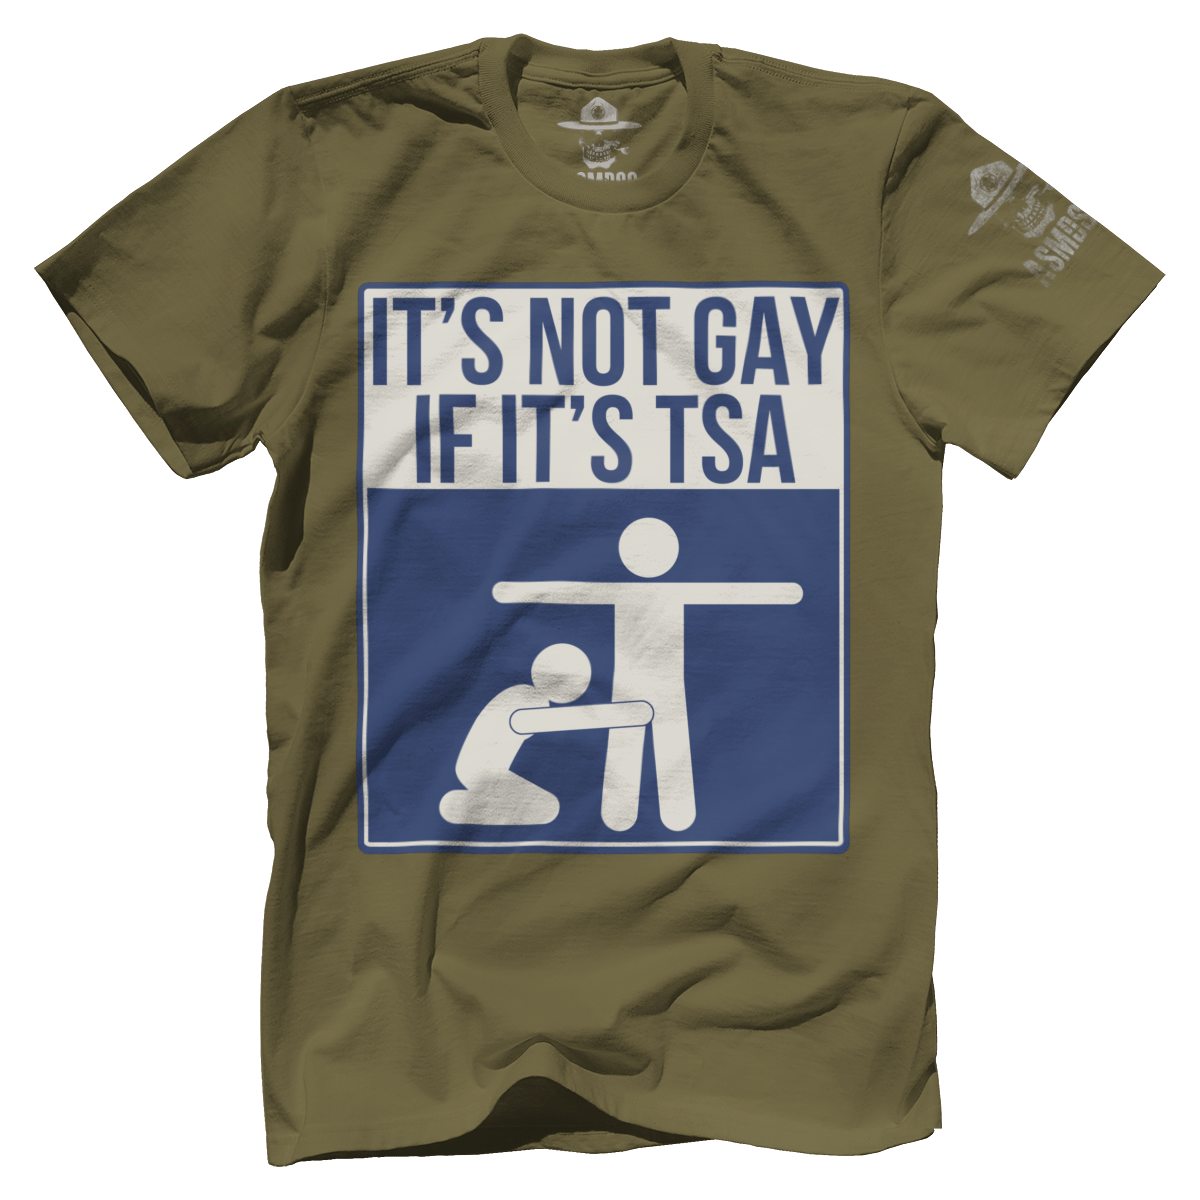 Not Gay If Its TSA